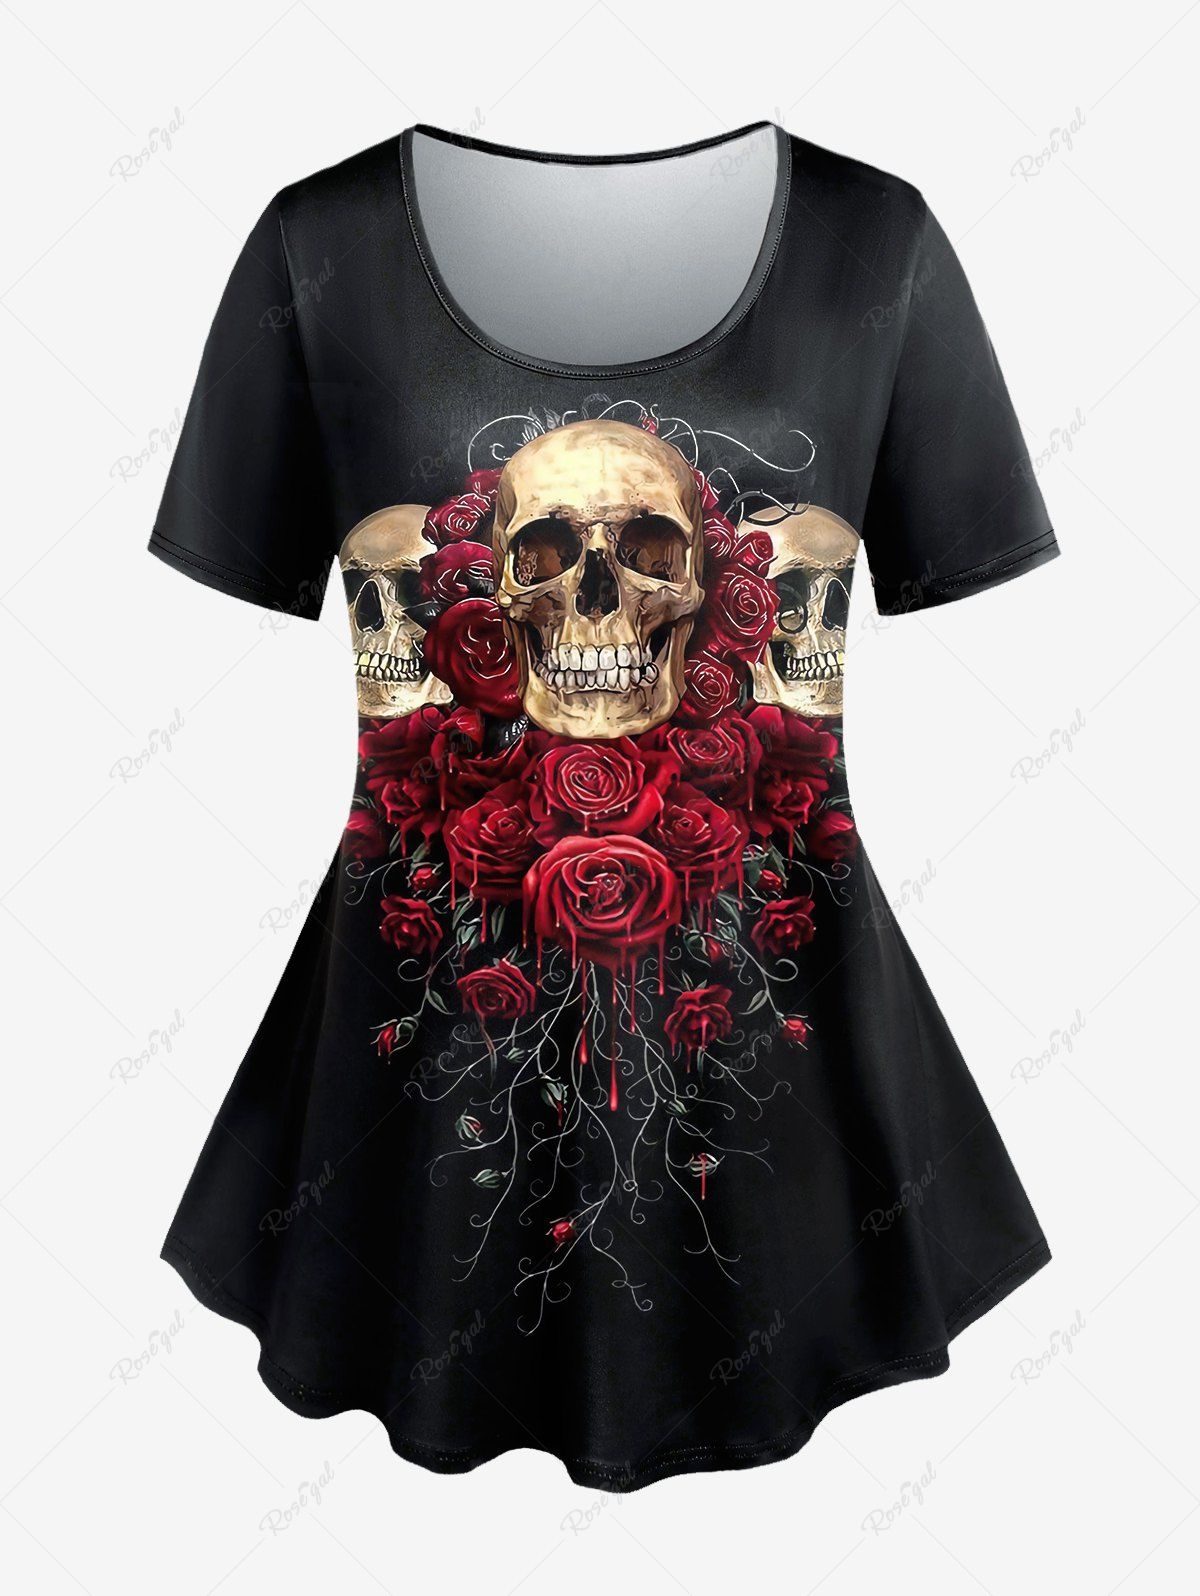 Chic Gothic Skull Rose Print T-shirt  